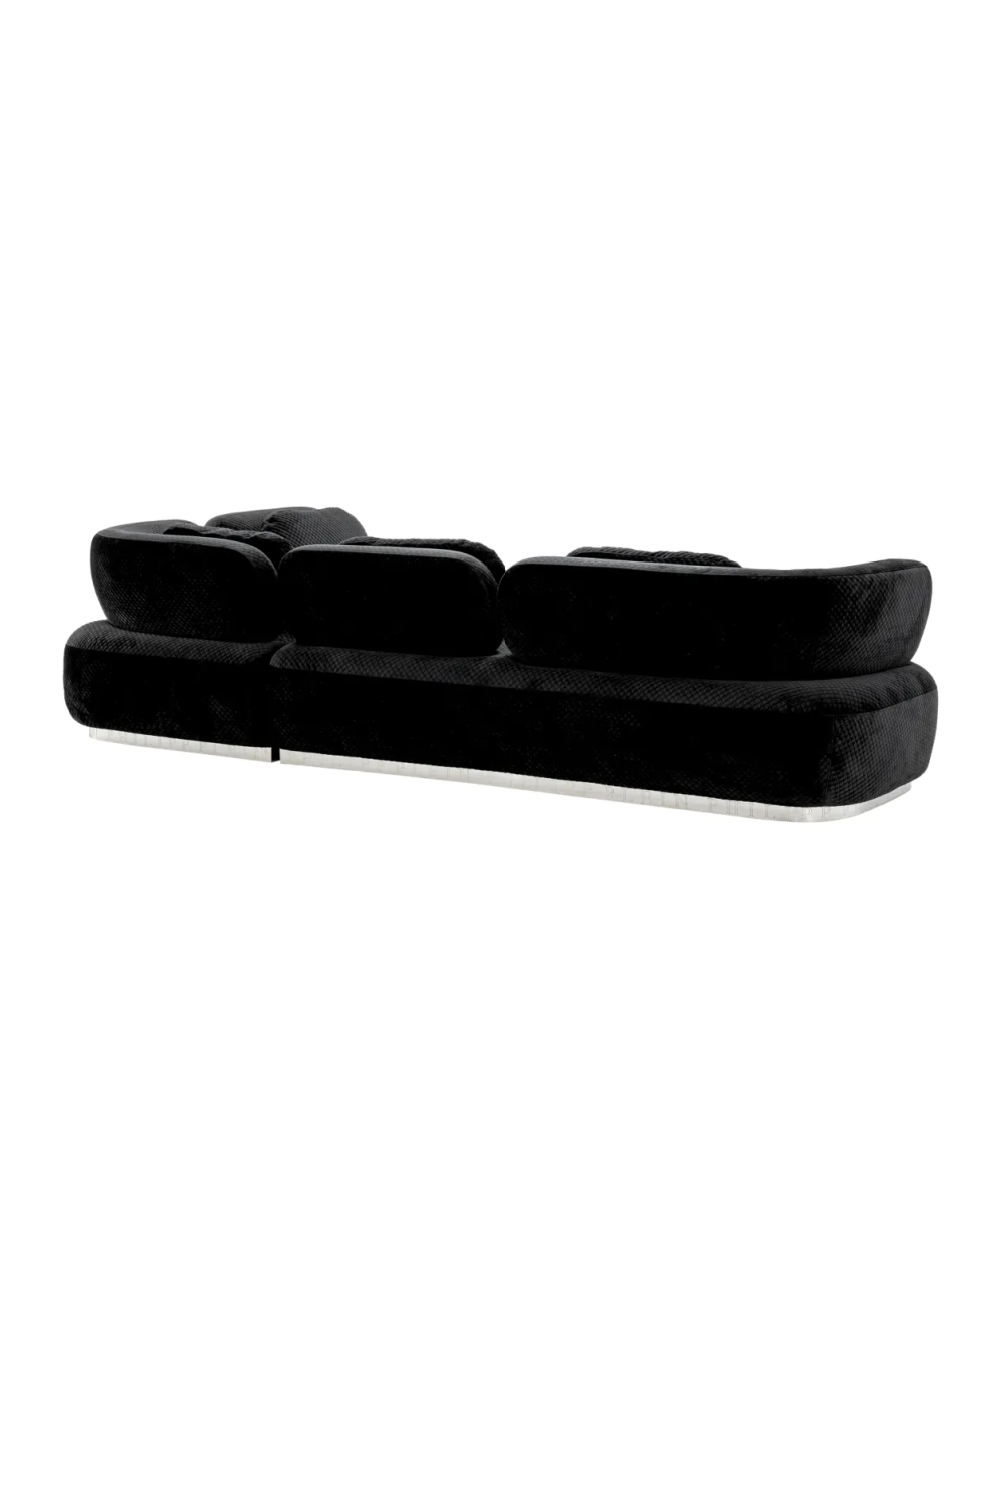 Black L-Shaped Velvet Sofa | Philipp Plein Signature Lounge | Oroa.com